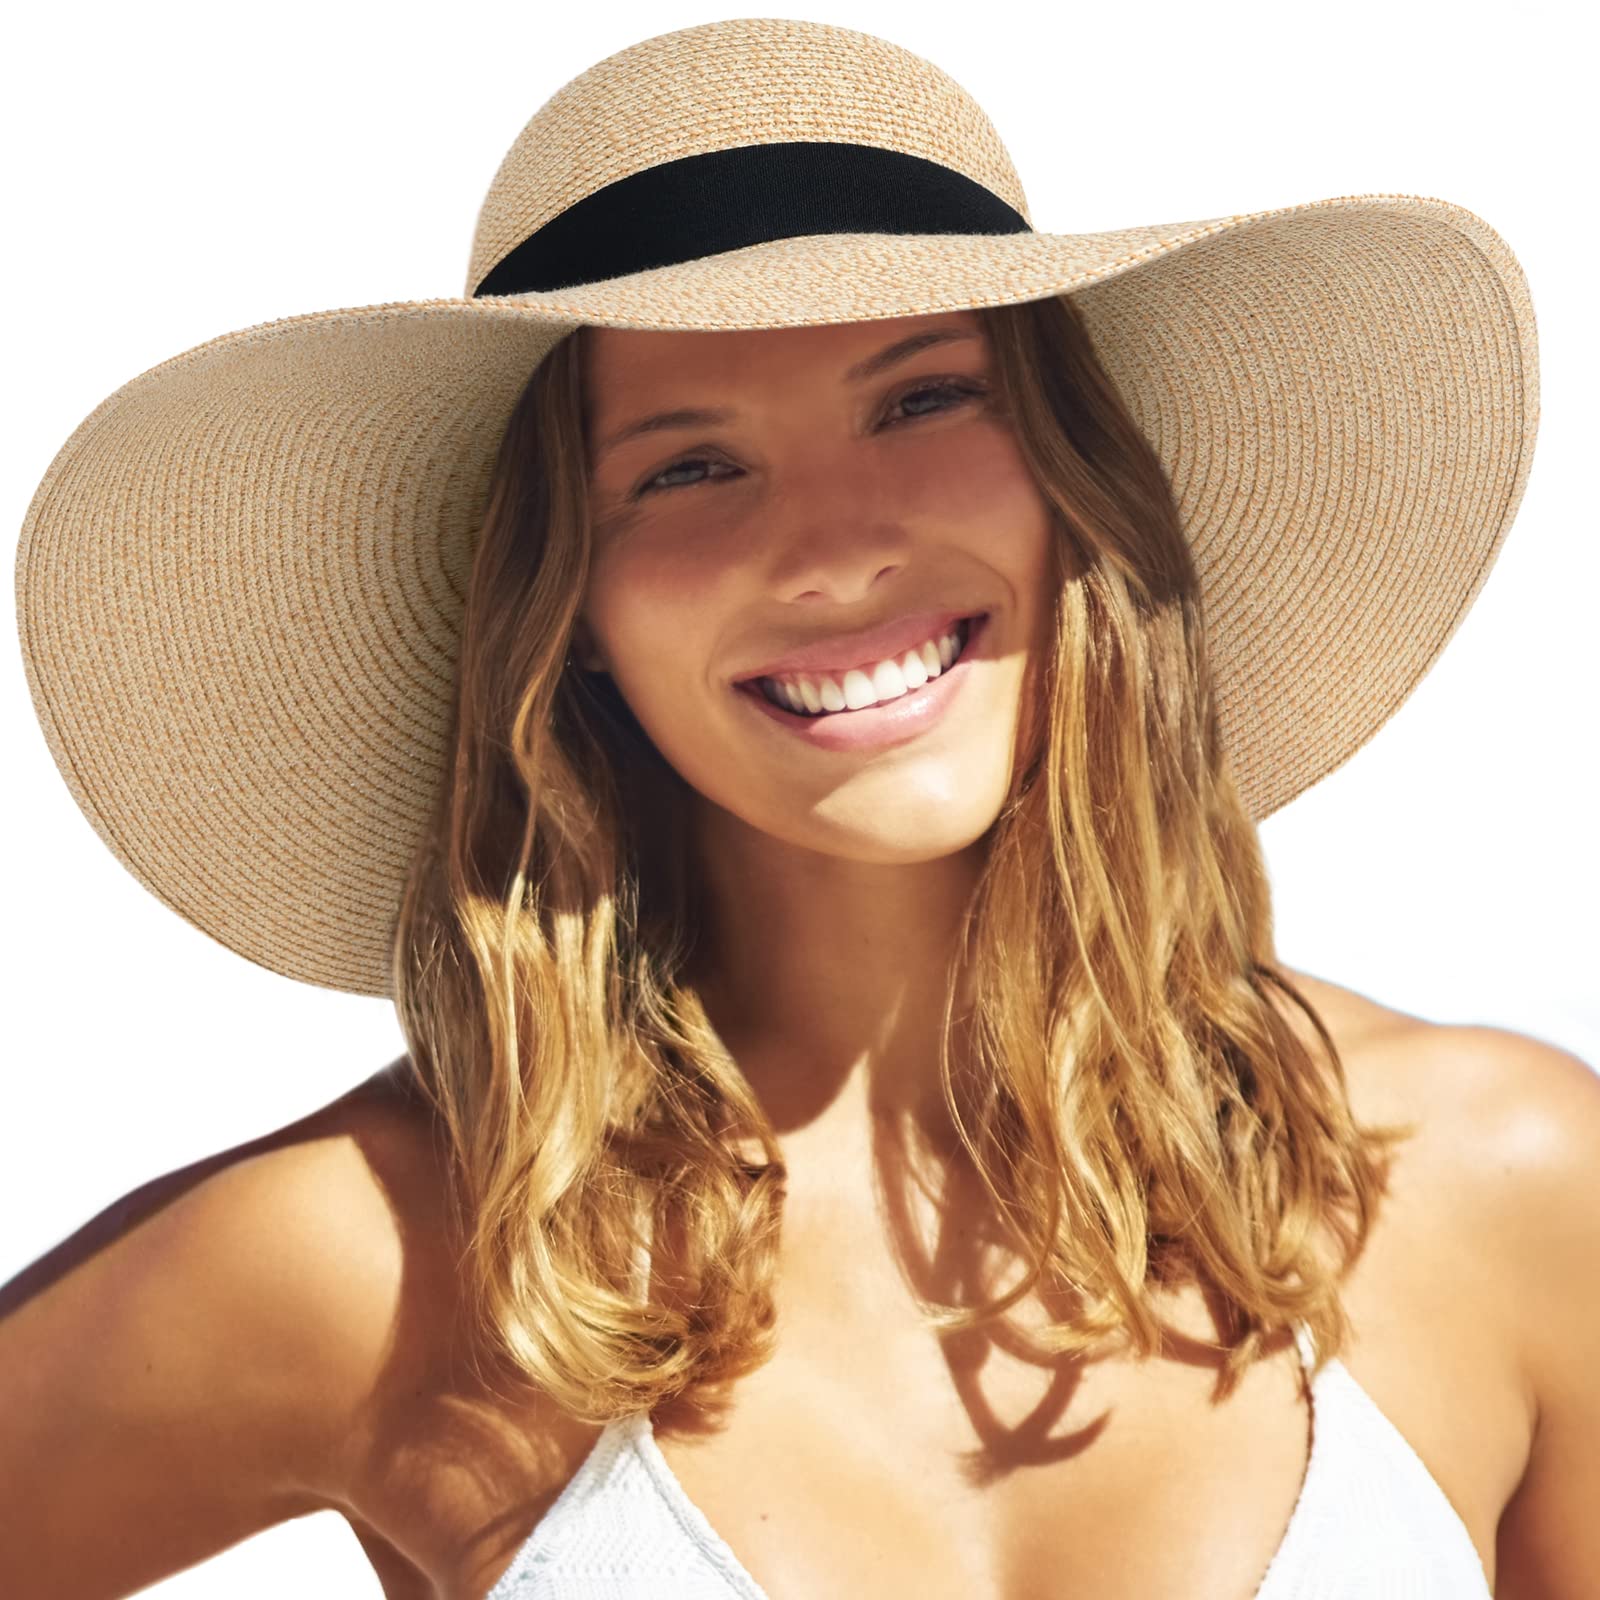 Women's Beach Hat Portable Packable Roll Up Wide Brim Sun, 50% OFF